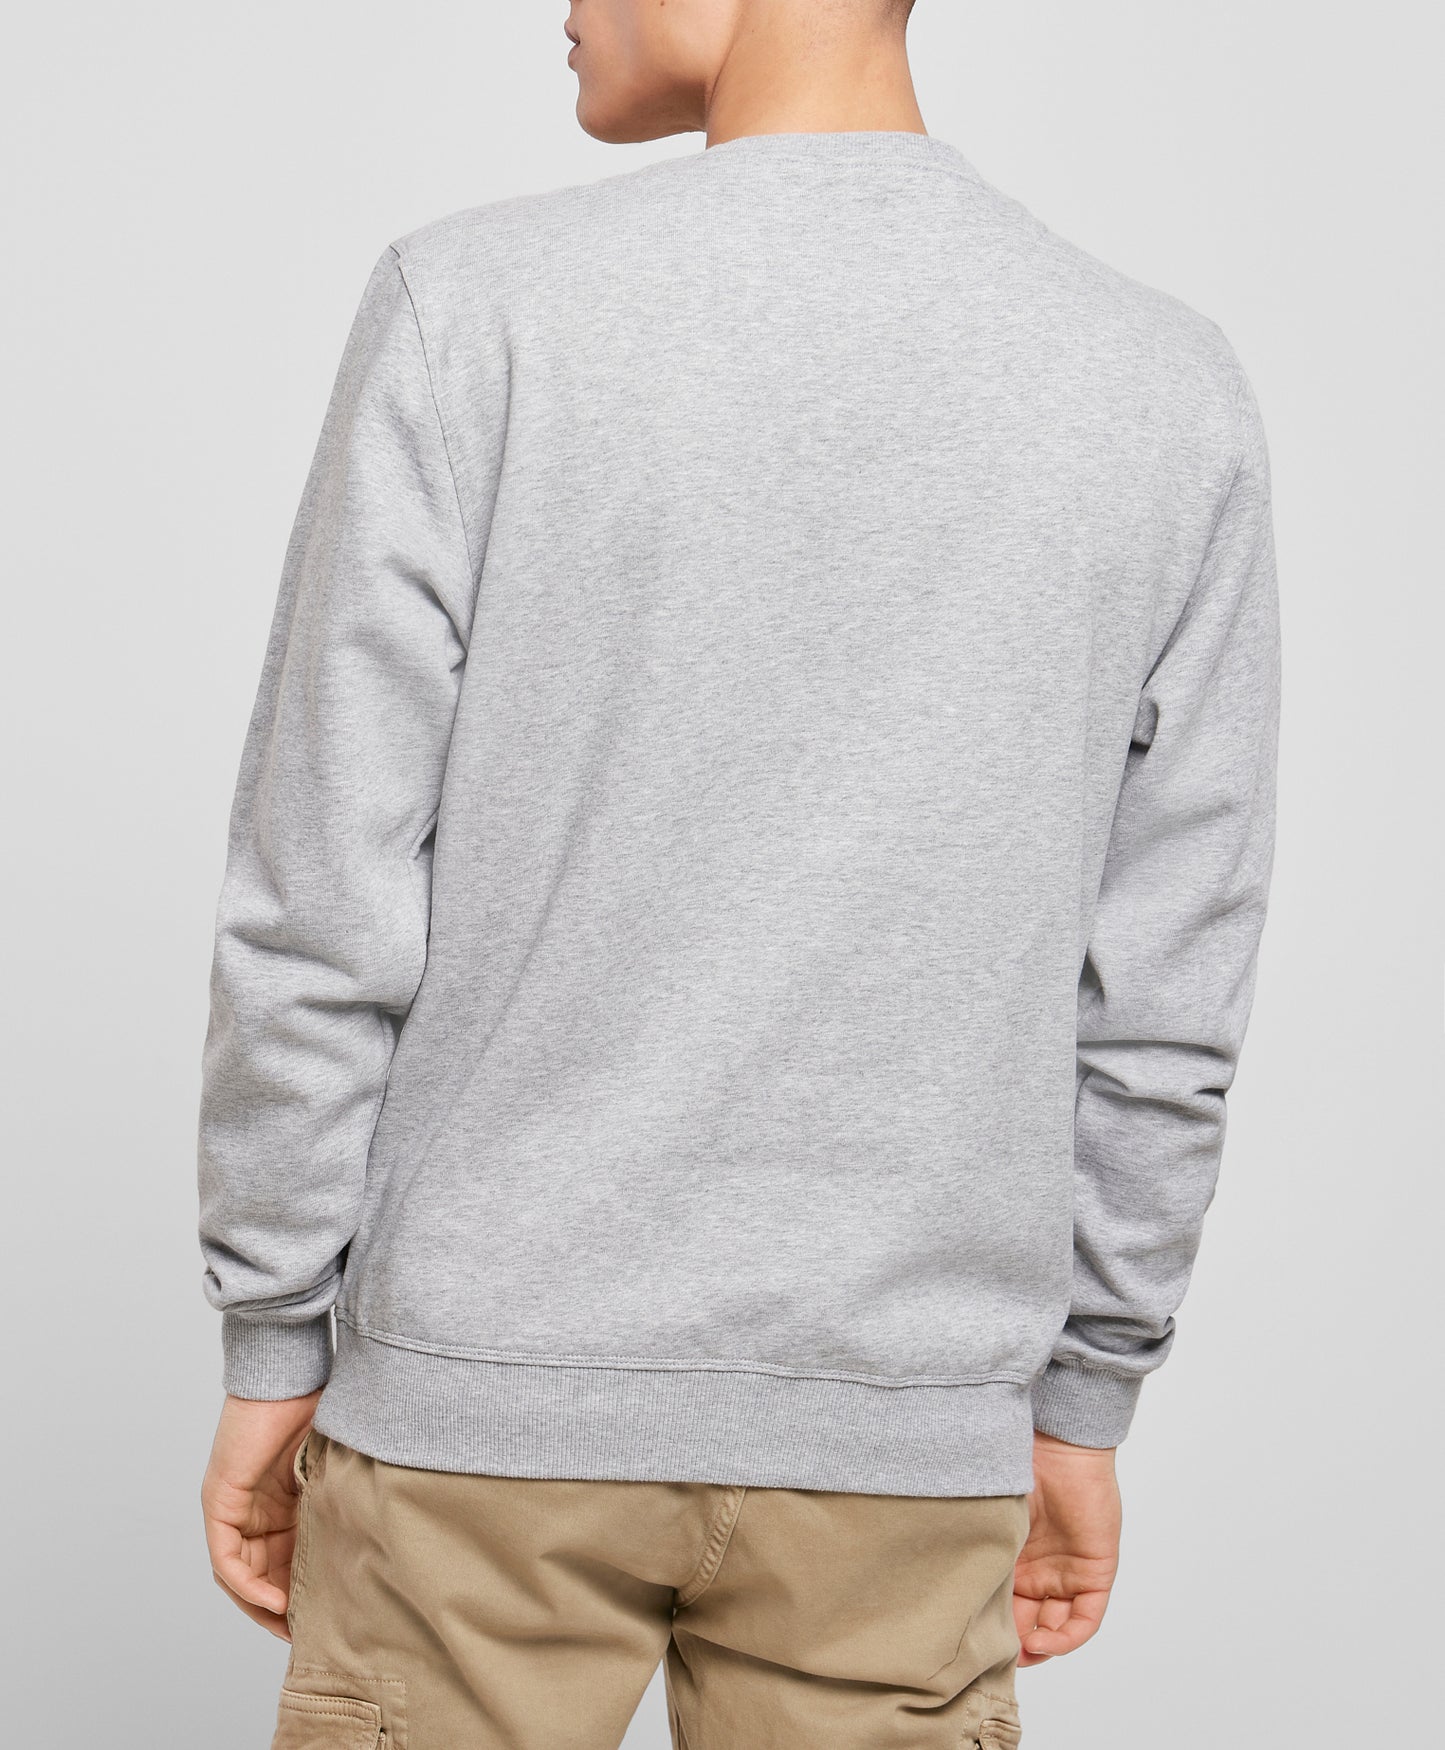 Basic "grey" Premium Crewneck Sweater